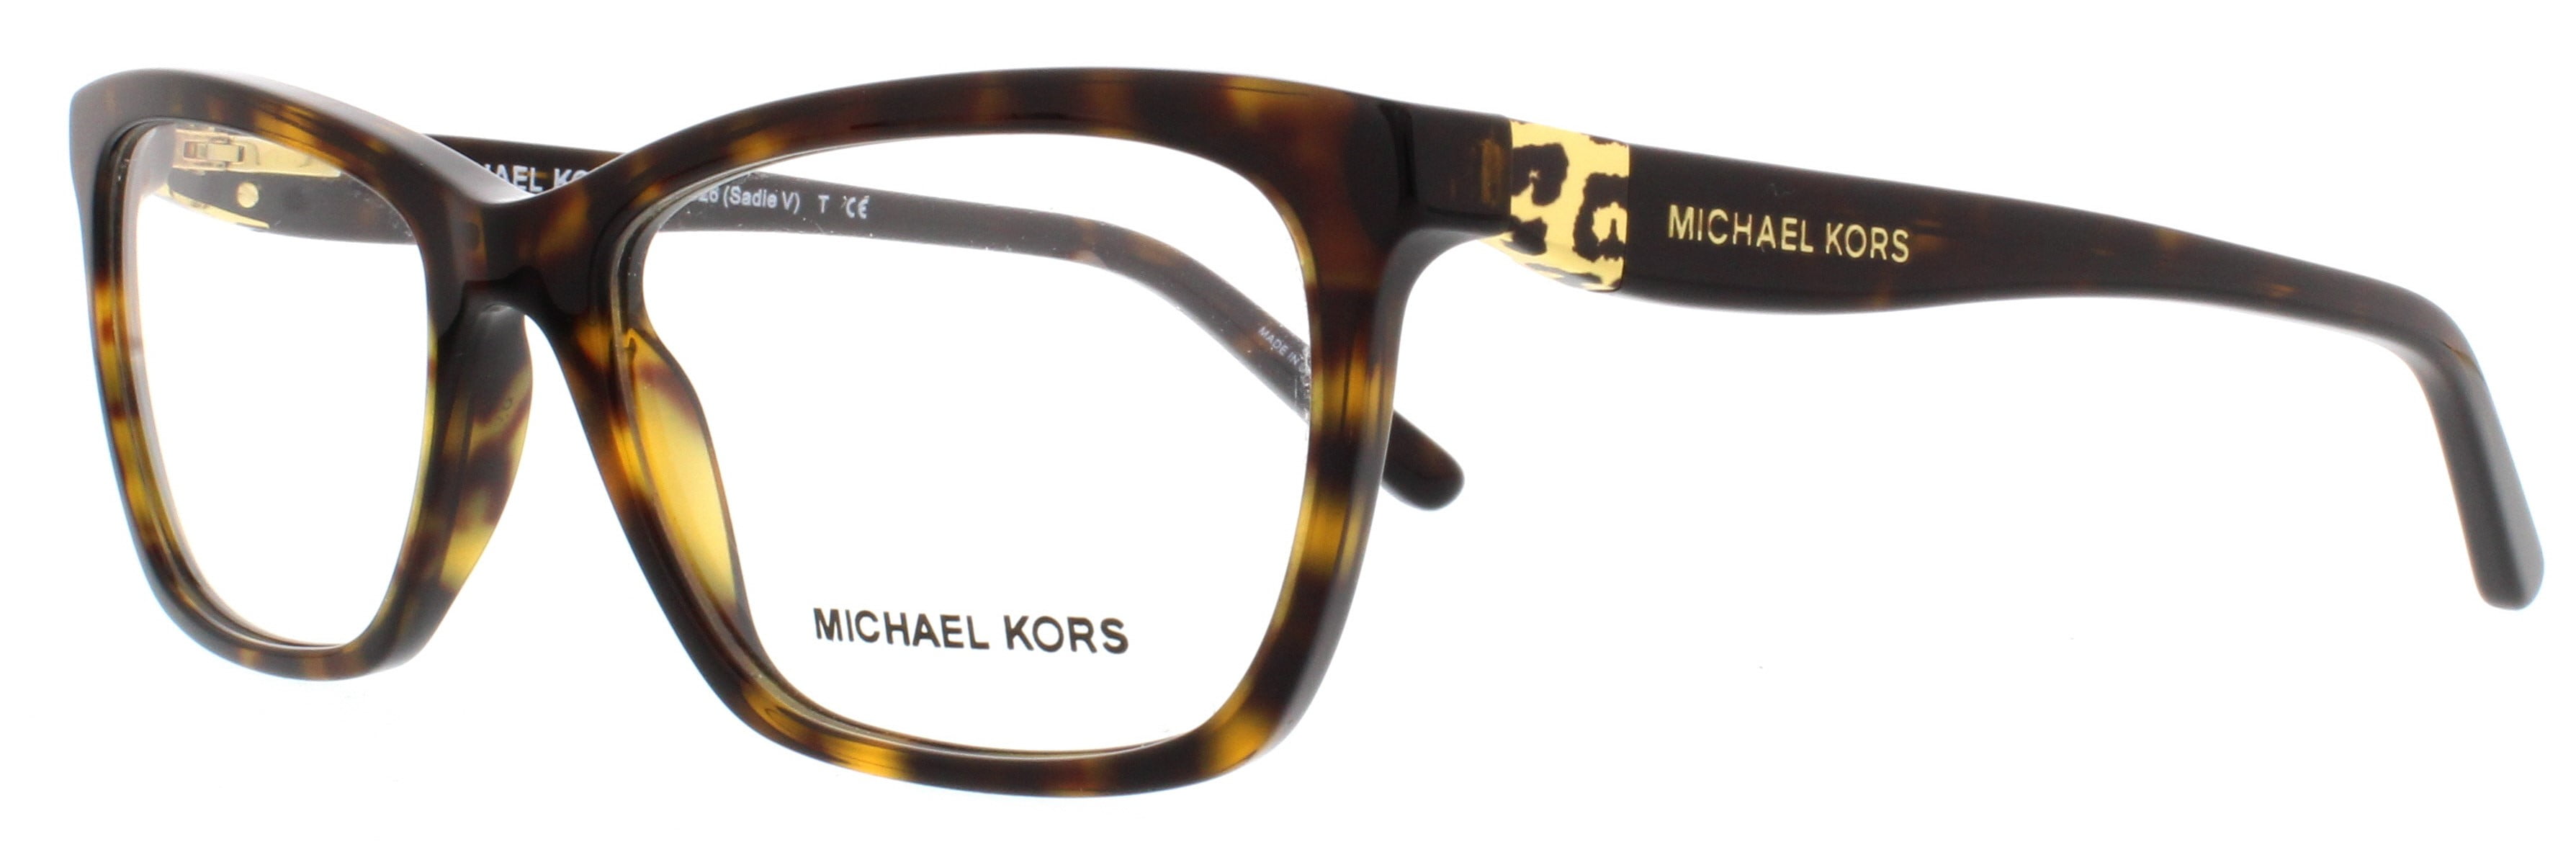 MICHAEL KORS Eyeglasses MK 4026 3006 